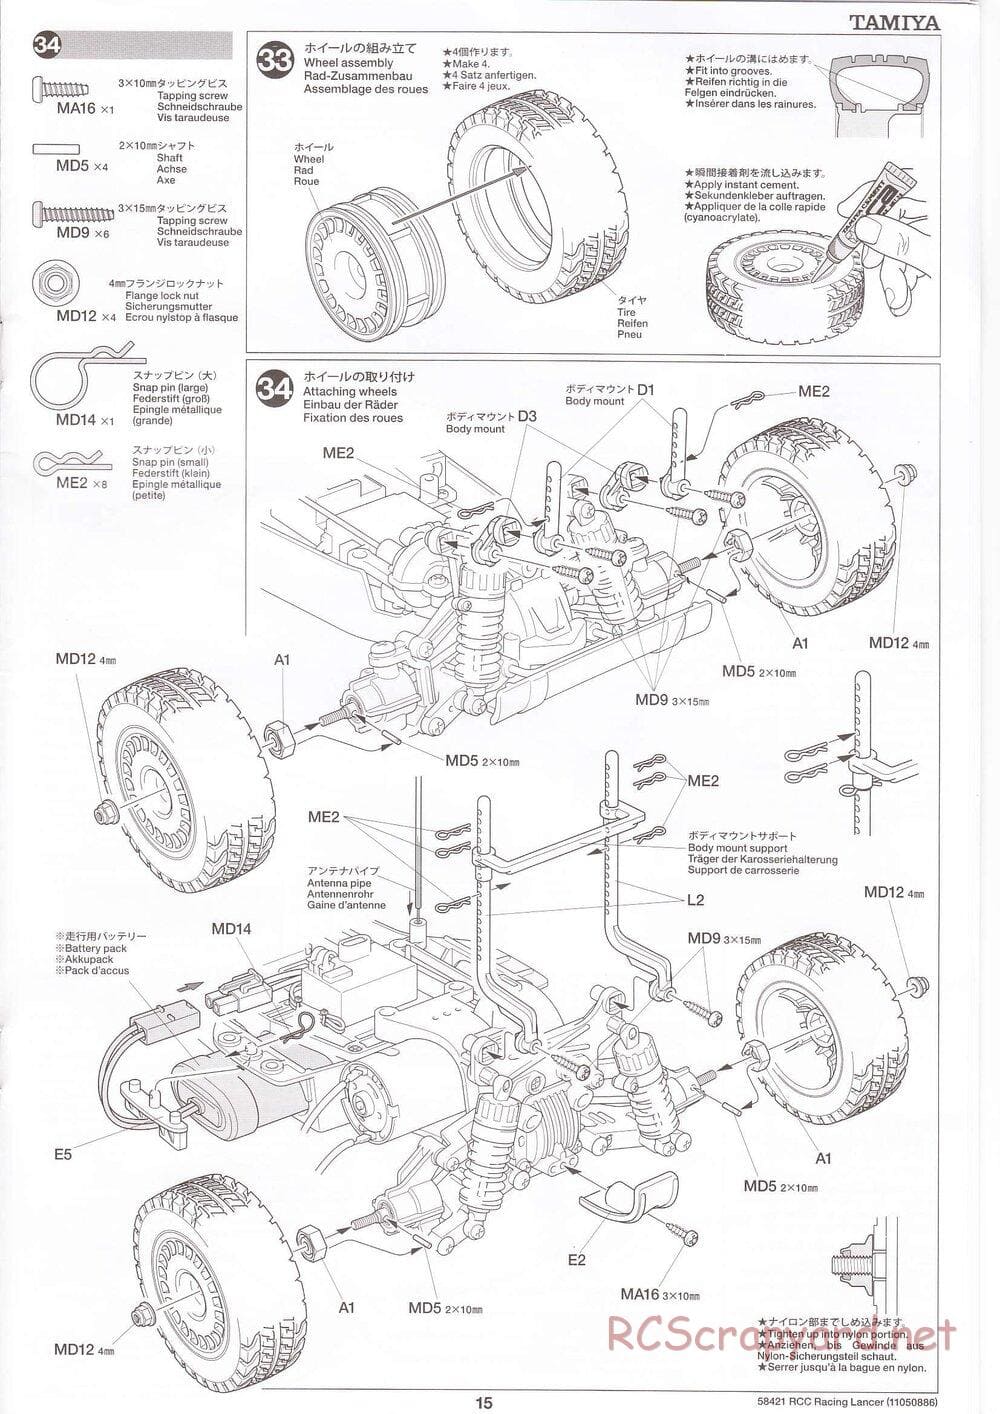 Tamiya - Mitsubishi Racing Lancer - DF-01 Chassis - Manual - Page 15